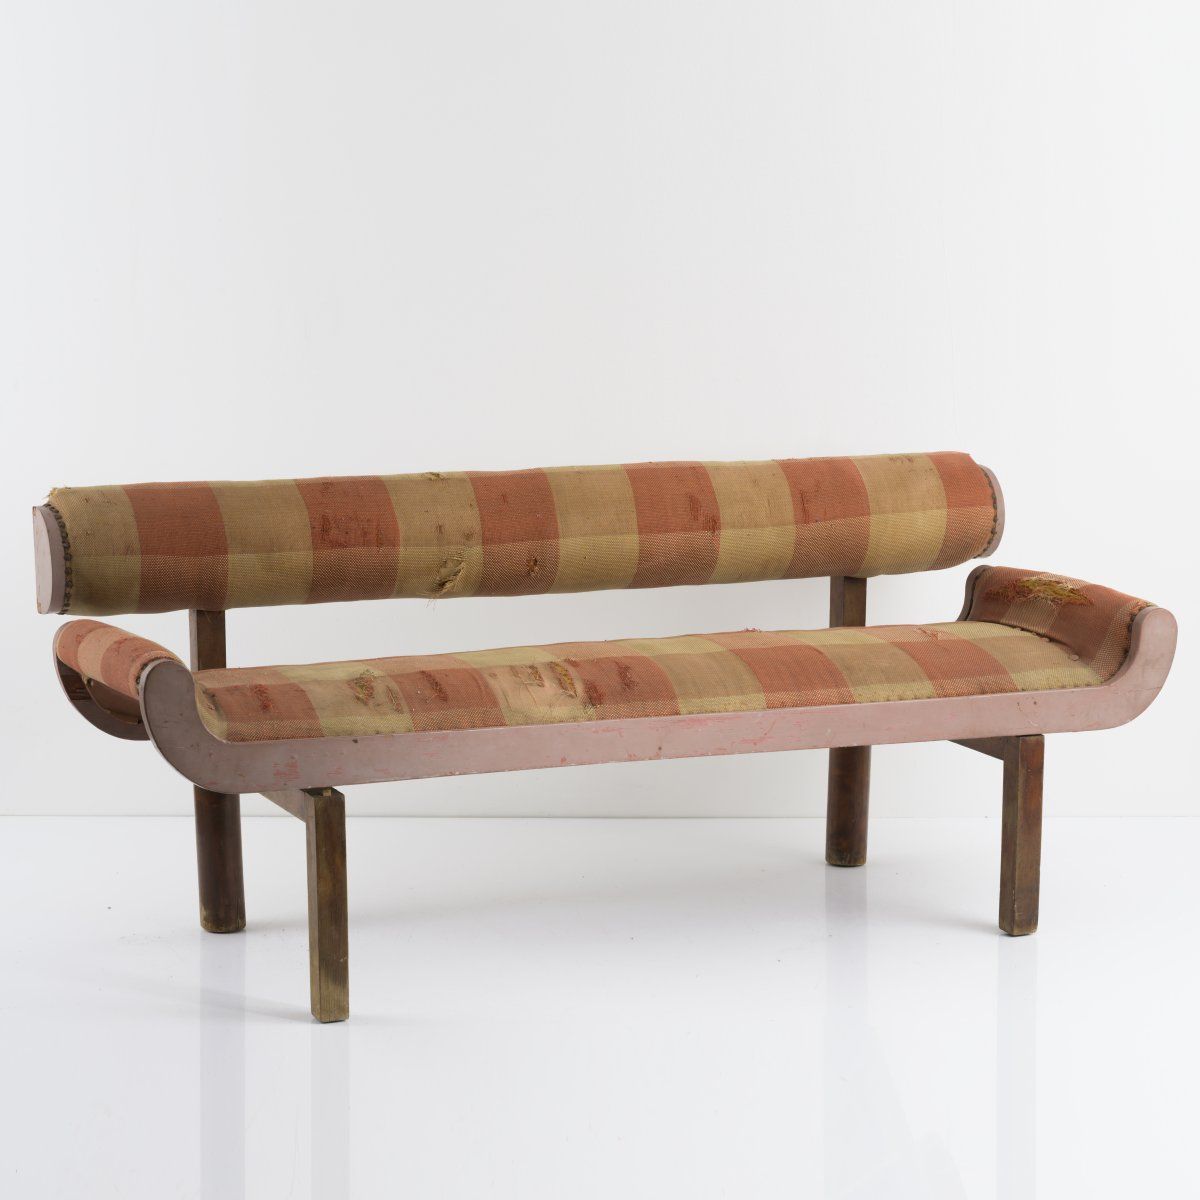 Null Franz Singer; Friedl Dicker, Sofa, 1920s, H. 74 x 176 x 67 cm. Wood, staine&hellip;